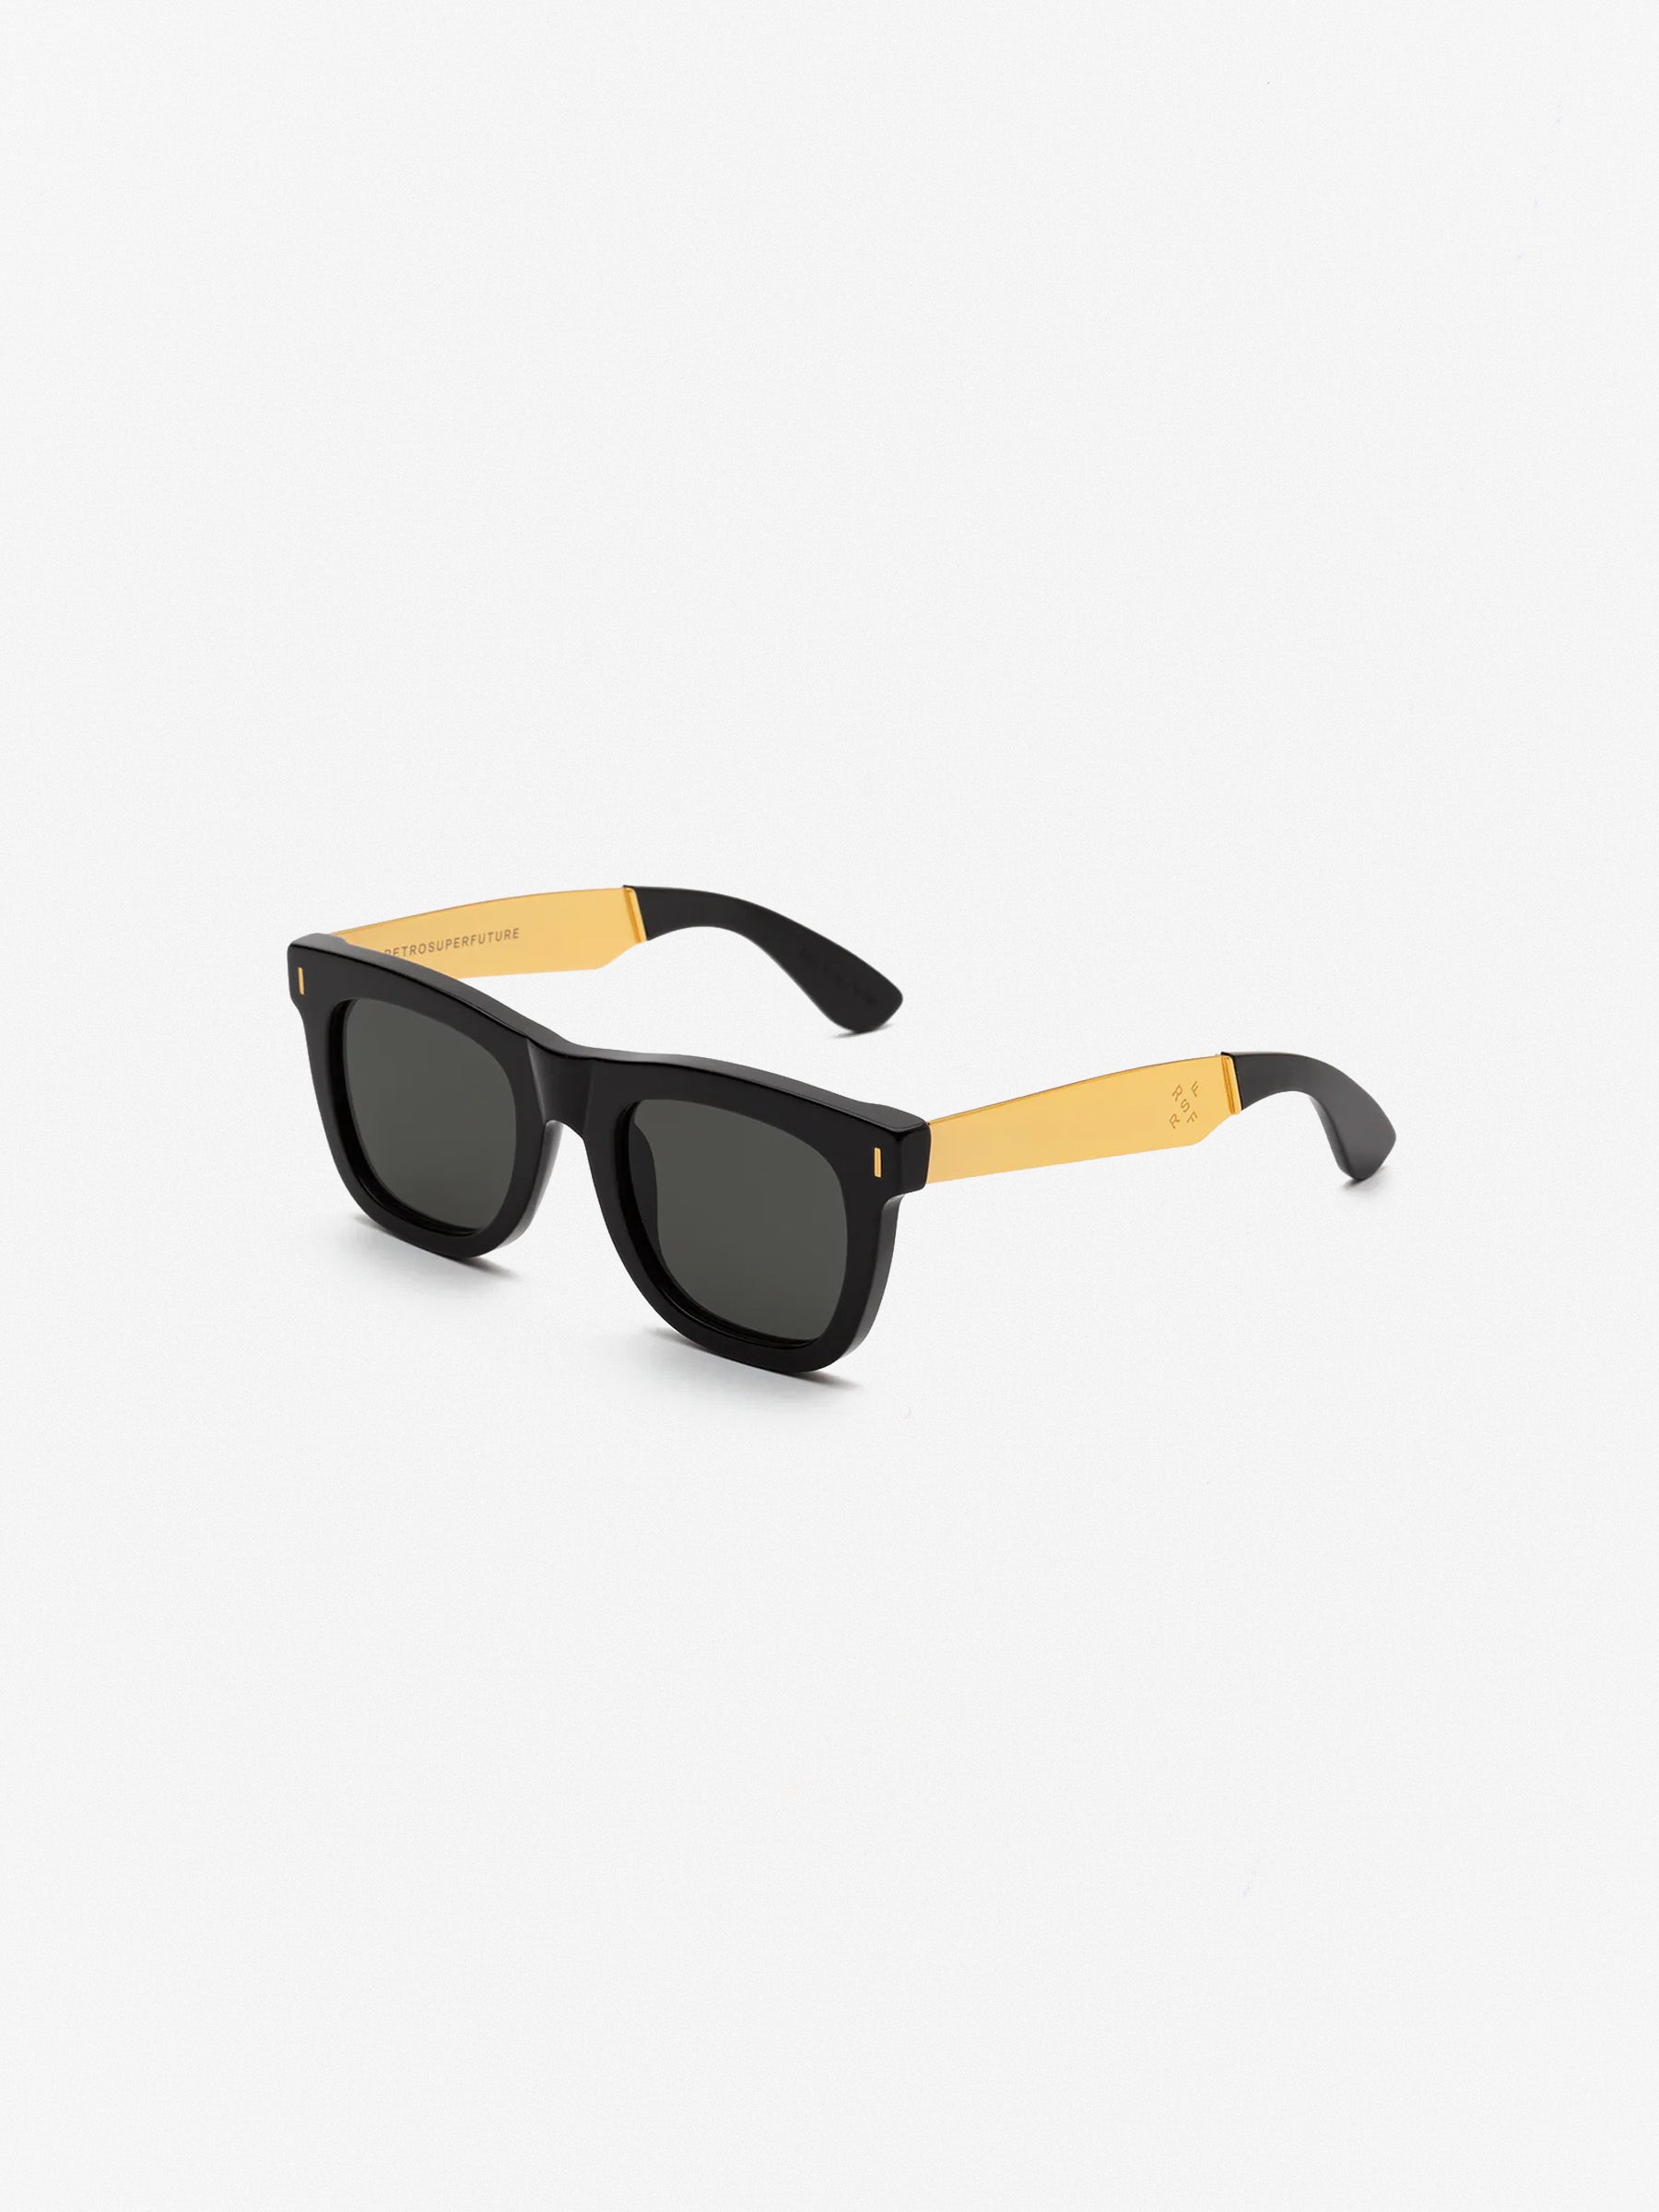 Ciccio Francis Sunglasses Black/Gold